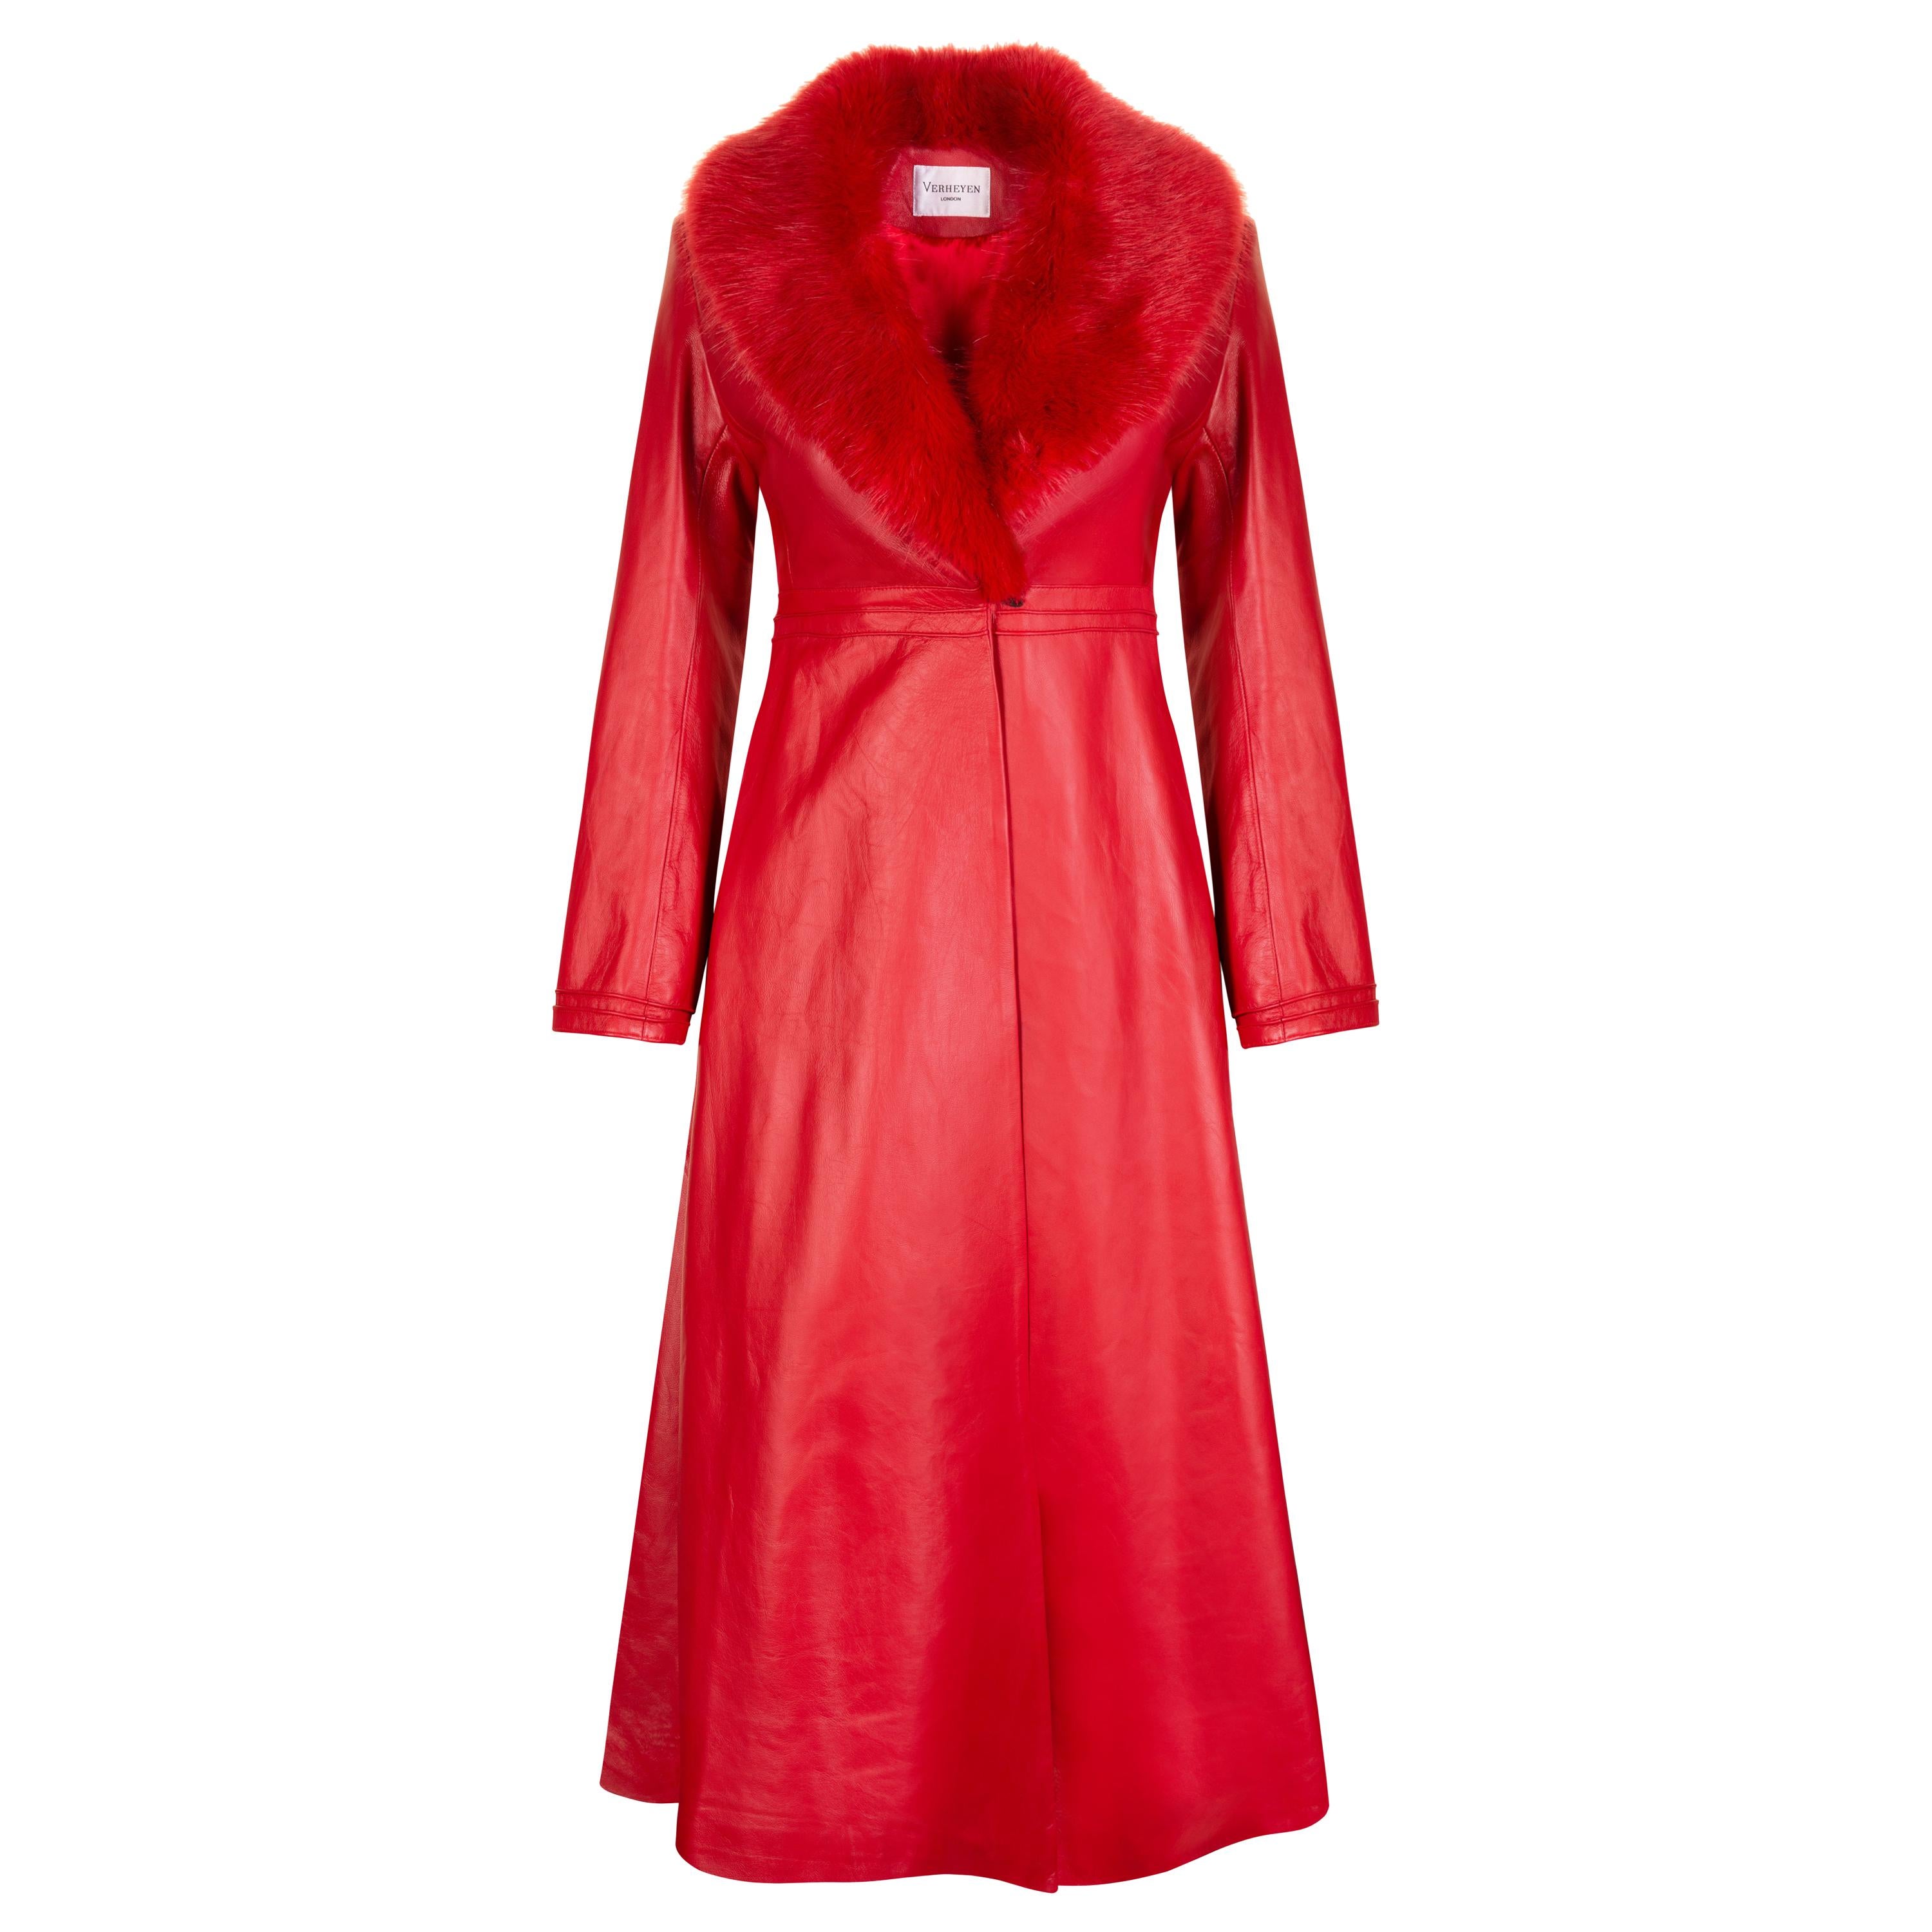 Verheyen London Edward Leather Coat with Faux Fur Collar in Red - Size uk 6 UK 